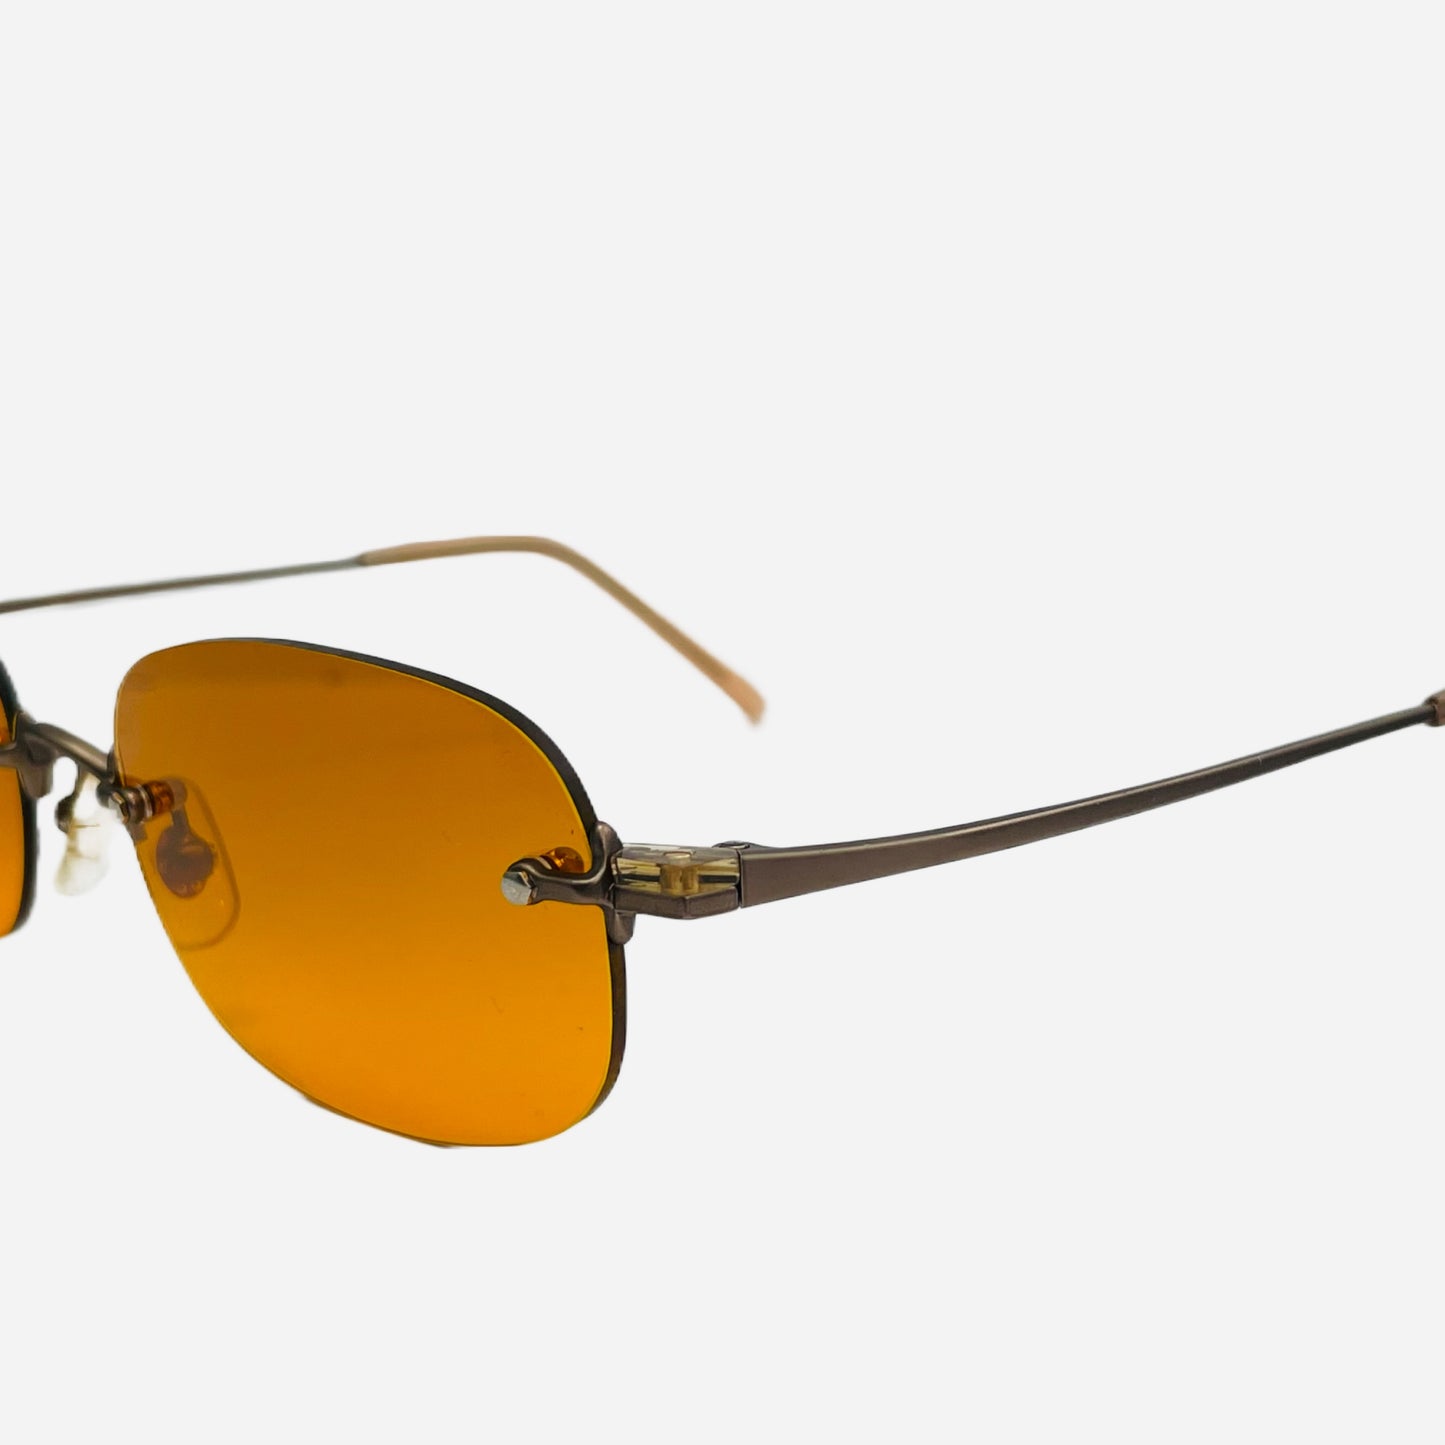 Vintage-Matsuda-Sonnenbrille-Sunglasses-rimless-rahmenlos-Custom-the-seekers-front-seite-detail